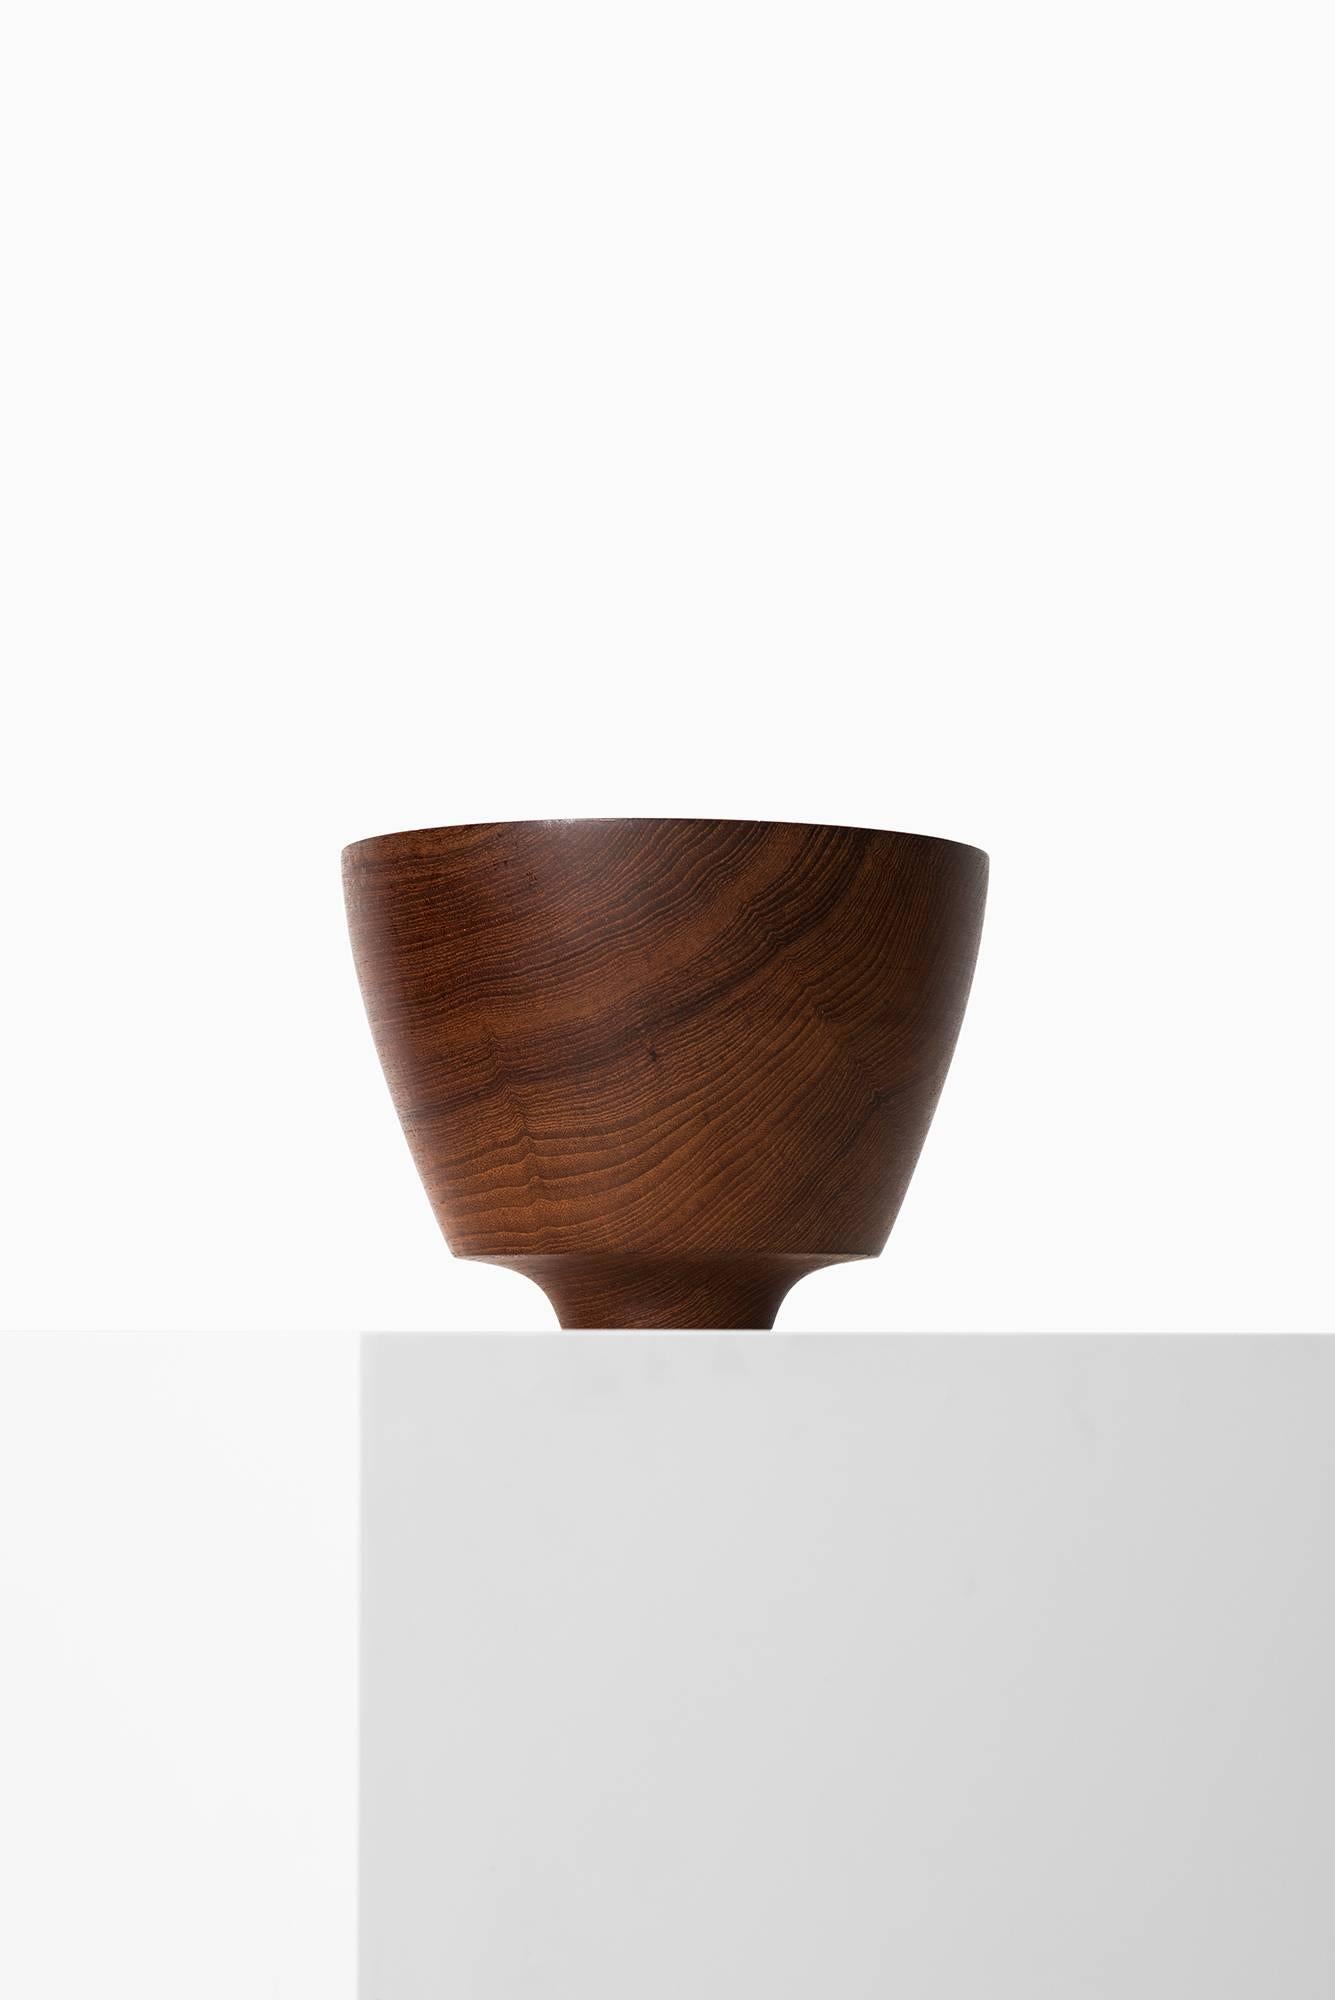 Teak bowl probably produced in Denmark.